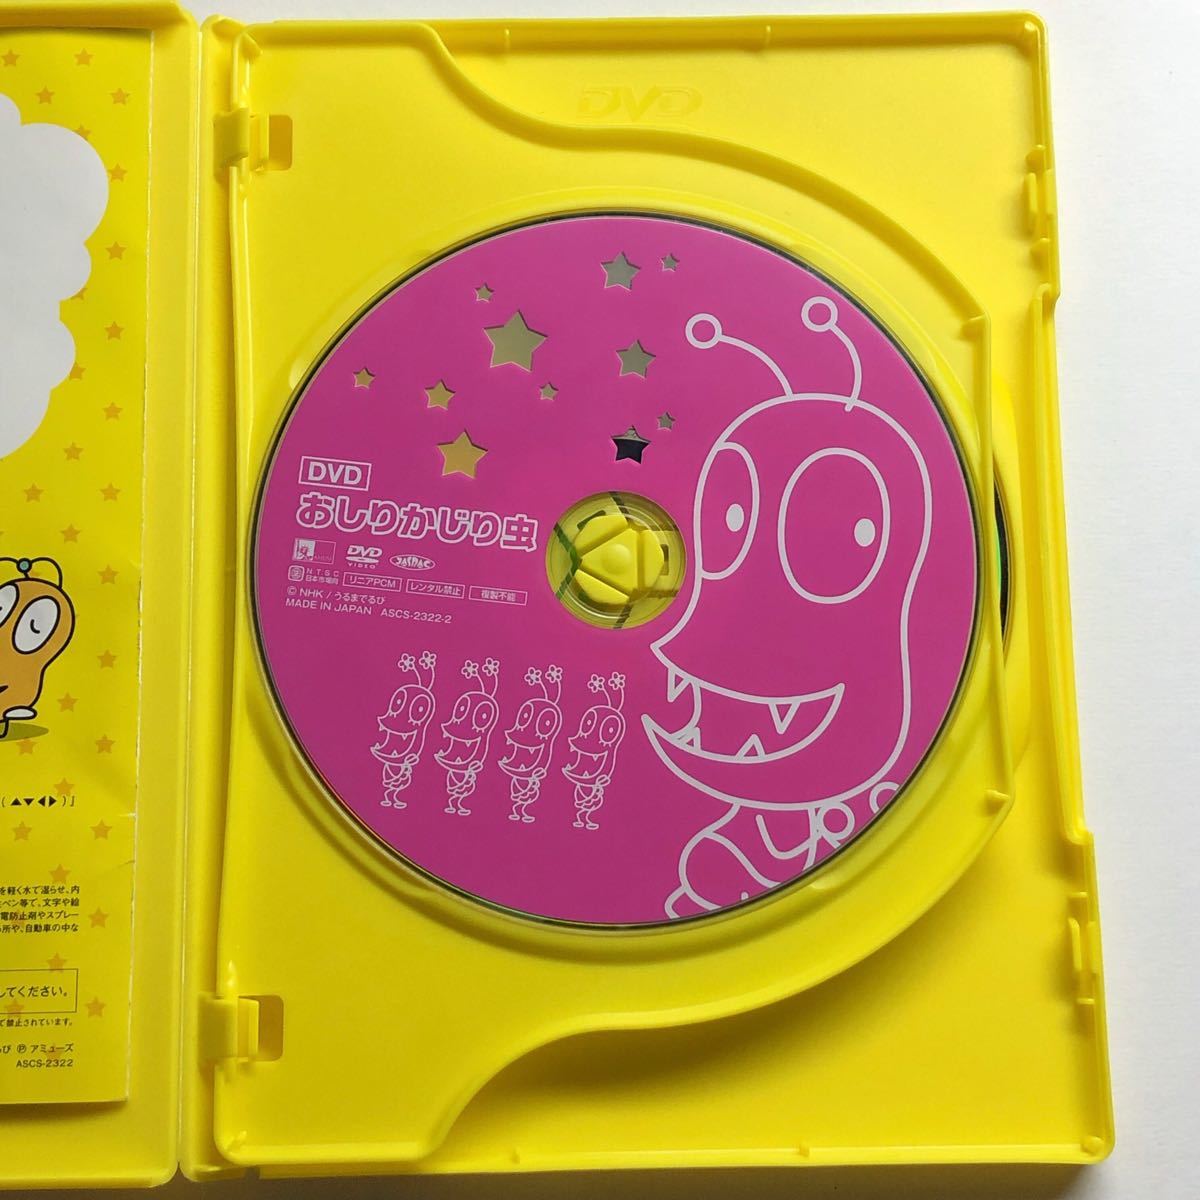 NHK みんなのうた おしりかじり虫 うるまでるび DVD CD